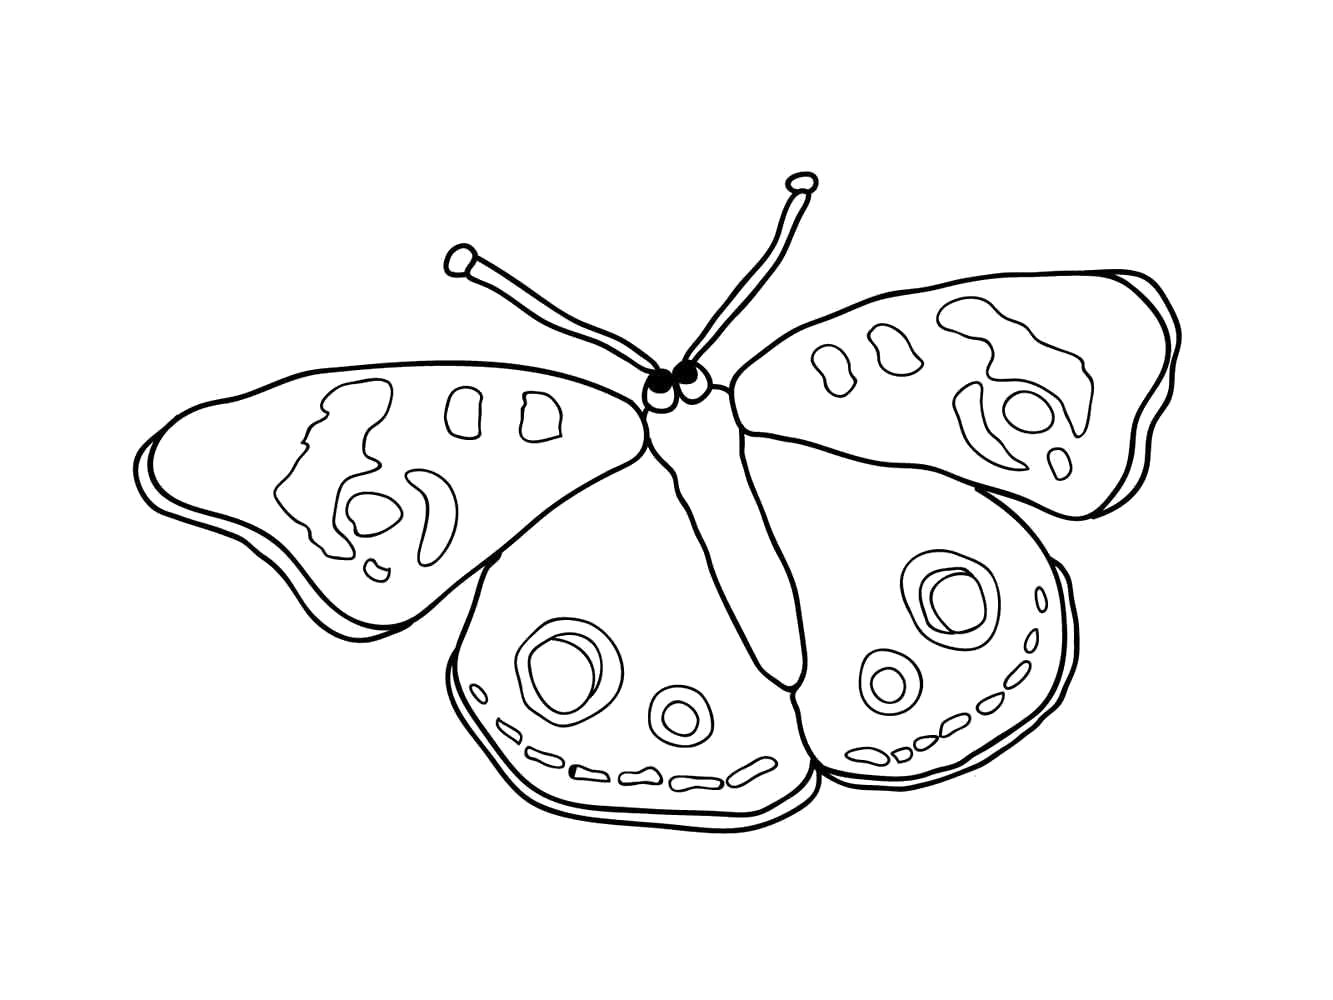   бабочка с узорами